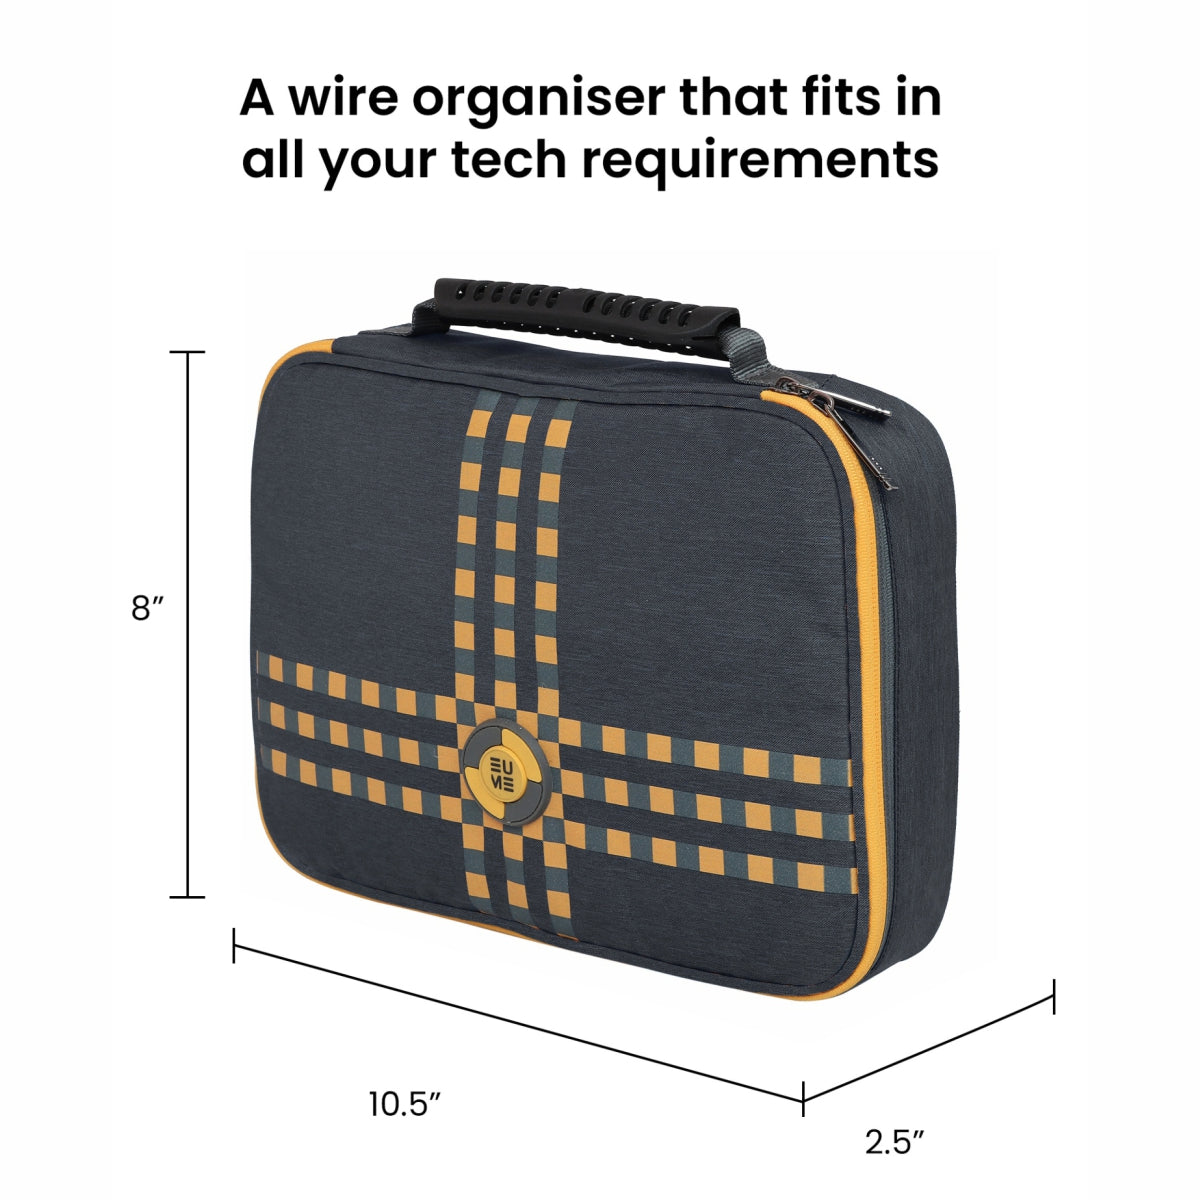 Fixa-I 4Ltr Wire Organizer